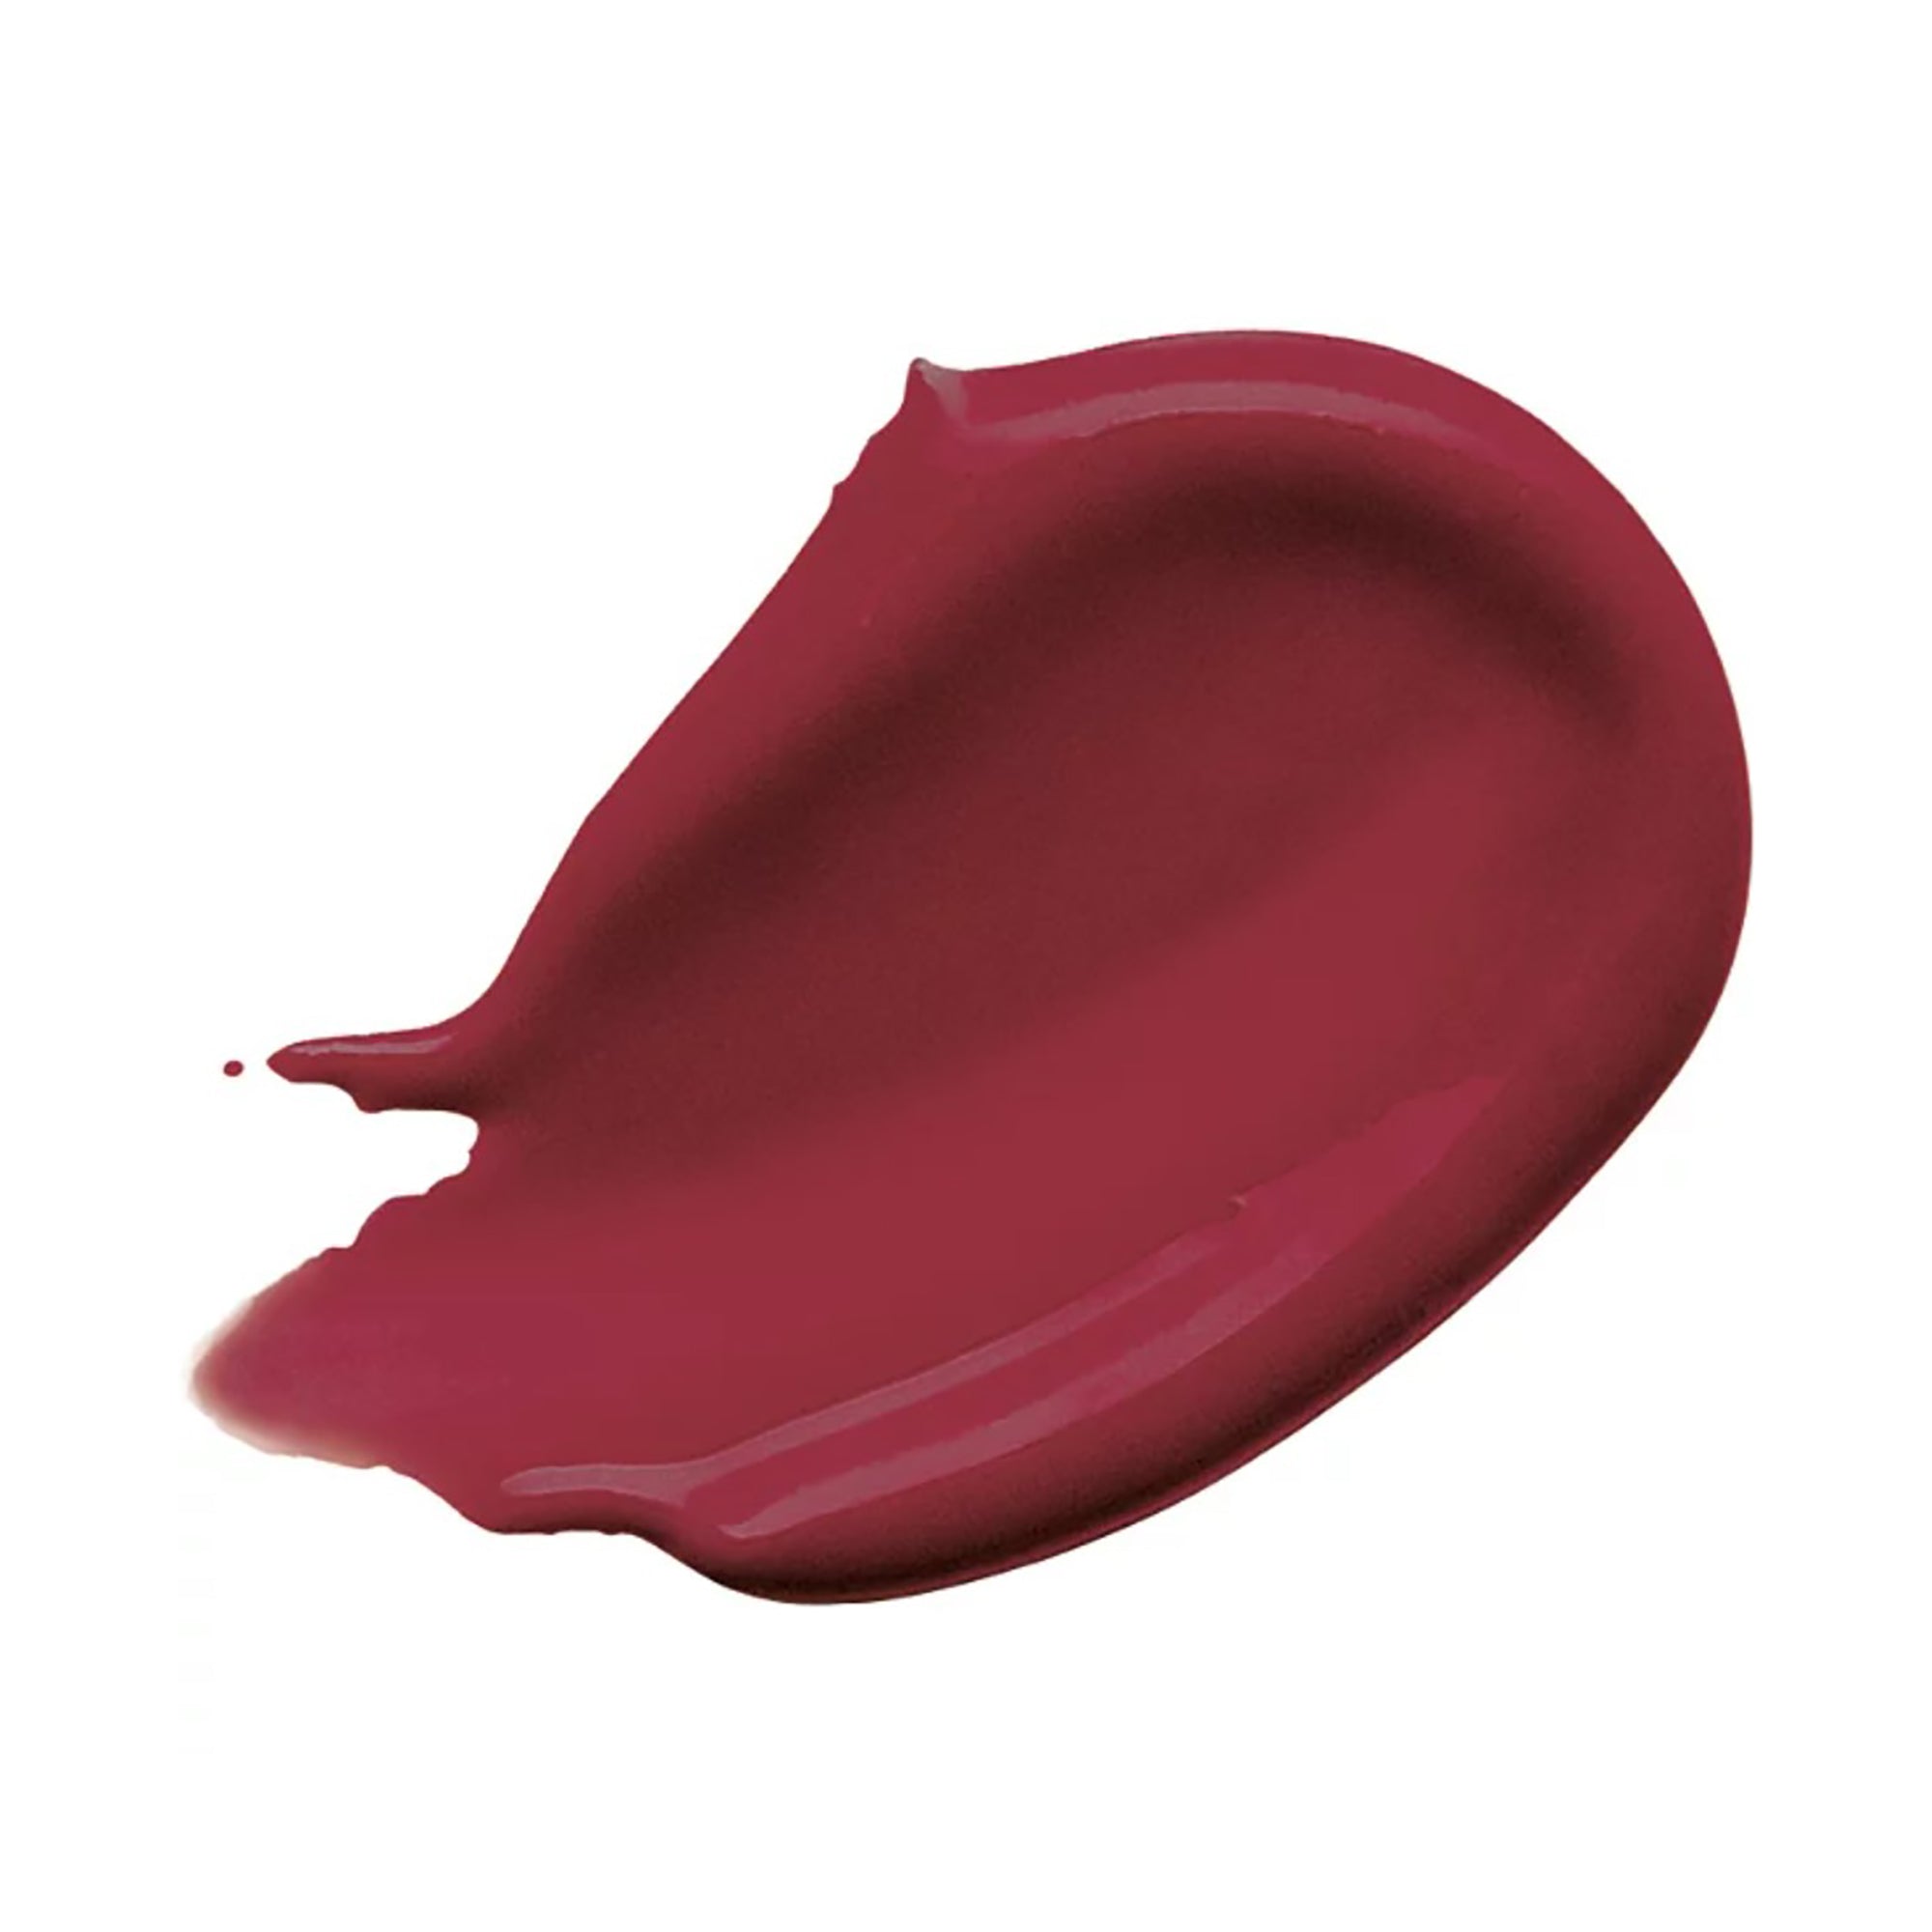 Buxom Full-on Plumping Lip Cream Gloss / KIR ROYALE / Swatch